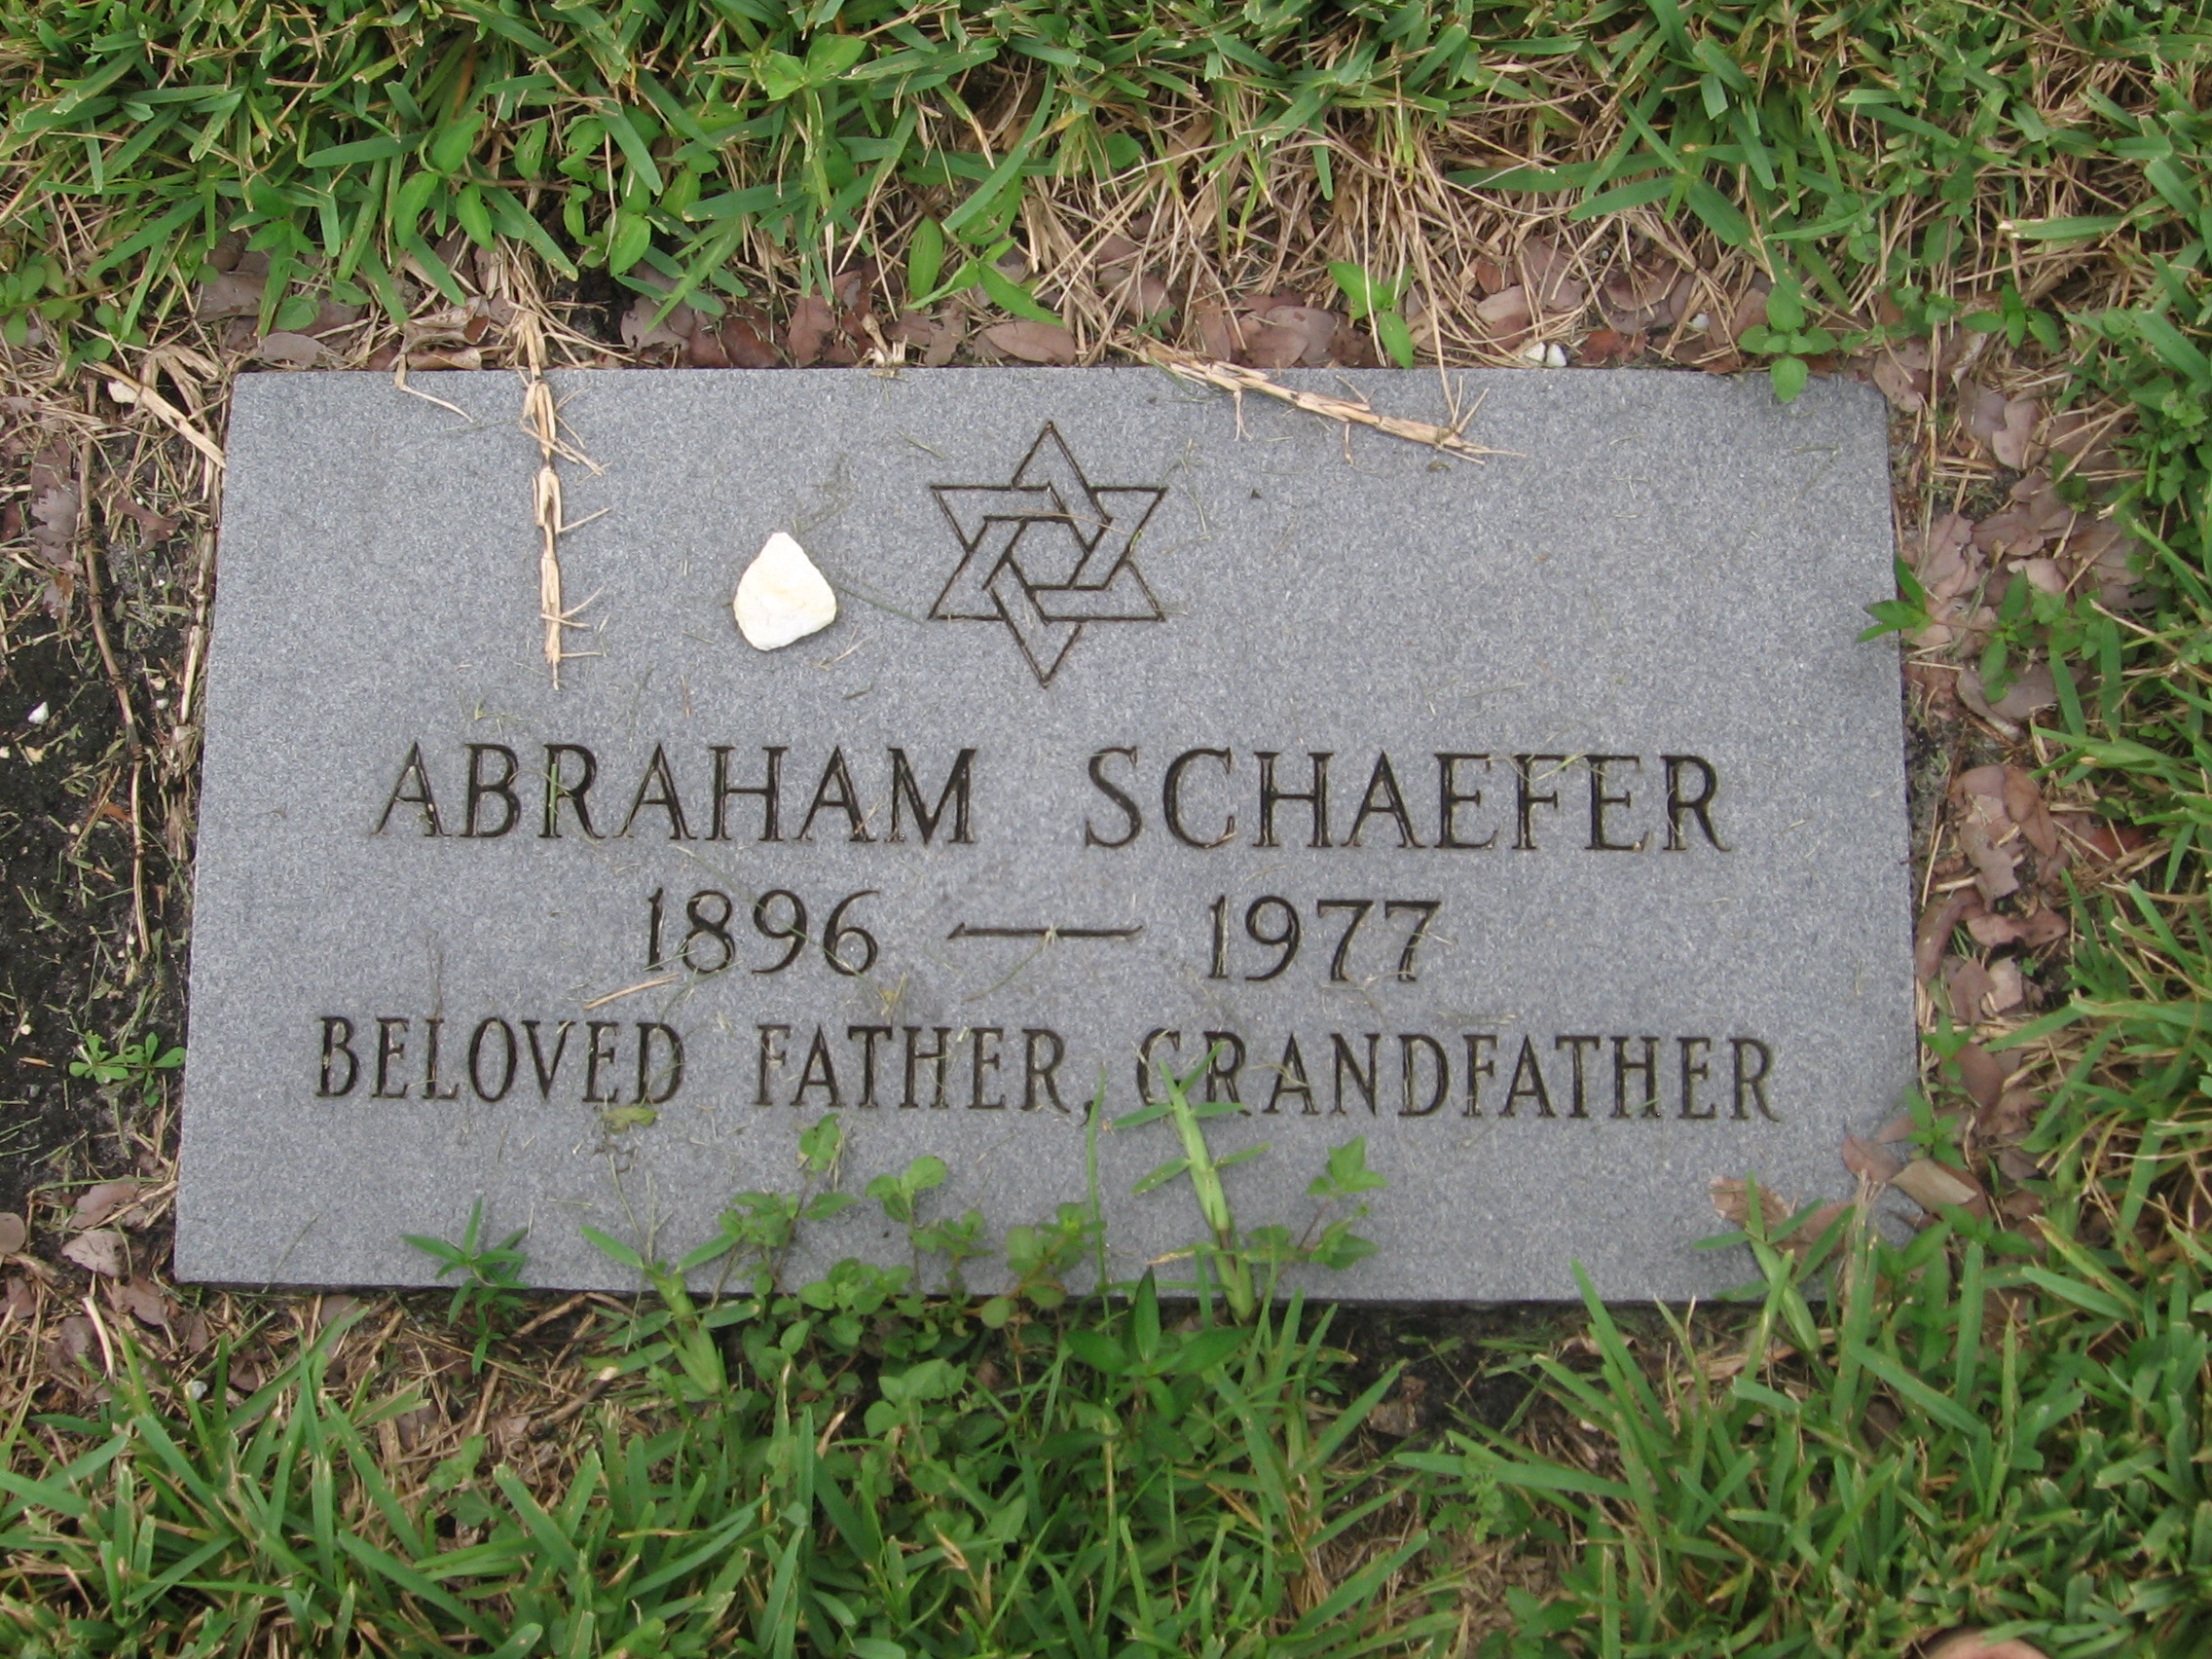 Abraham Schaefer